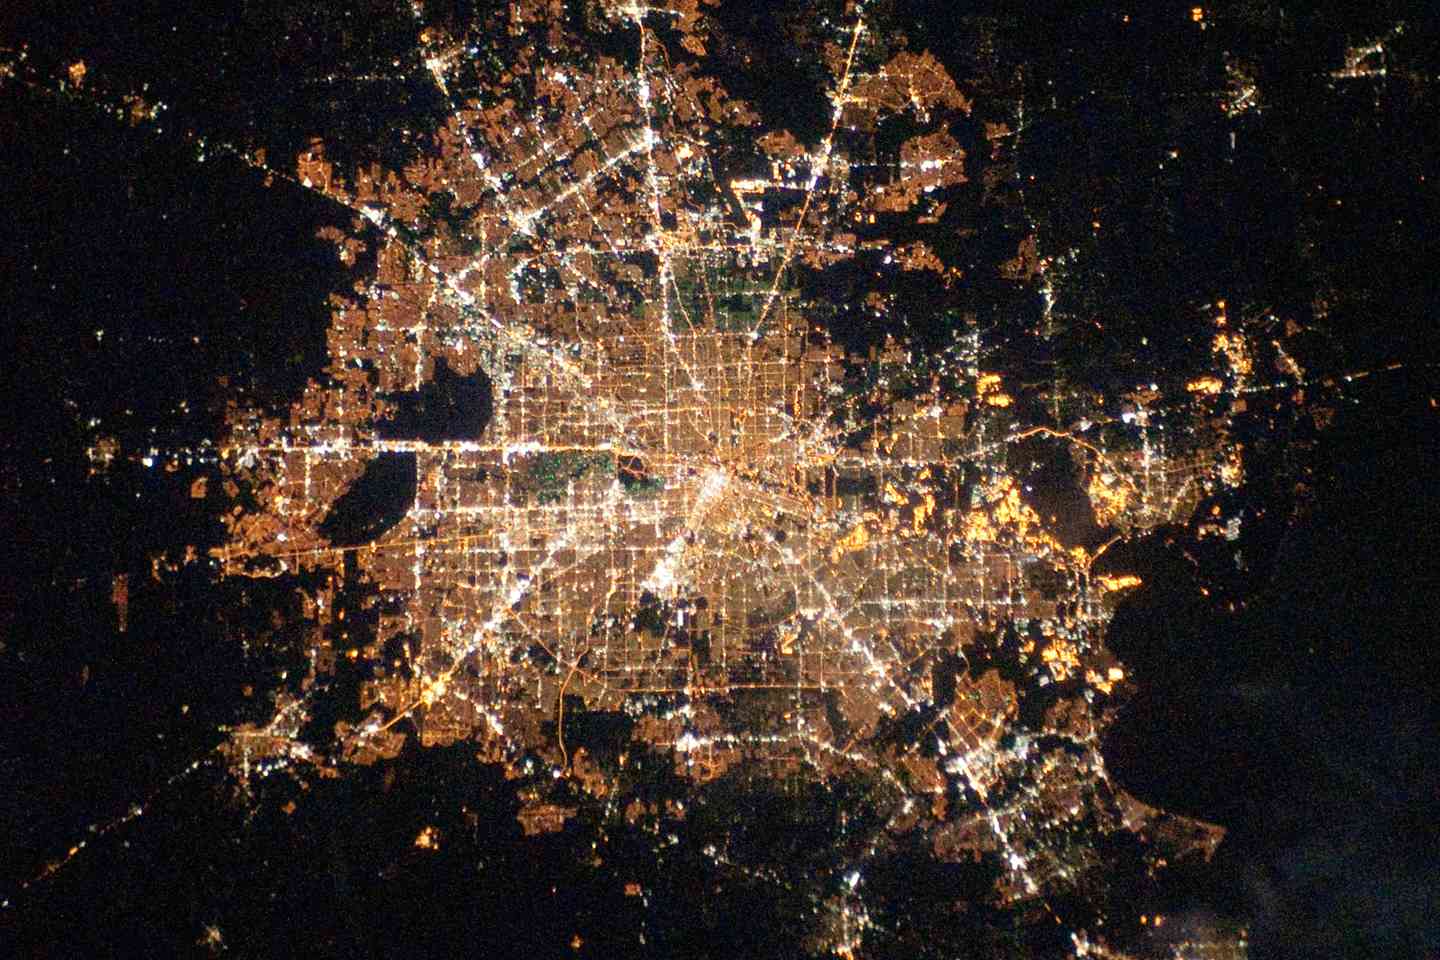 Vista de satélite de Houston, Texas, iluminada de noche